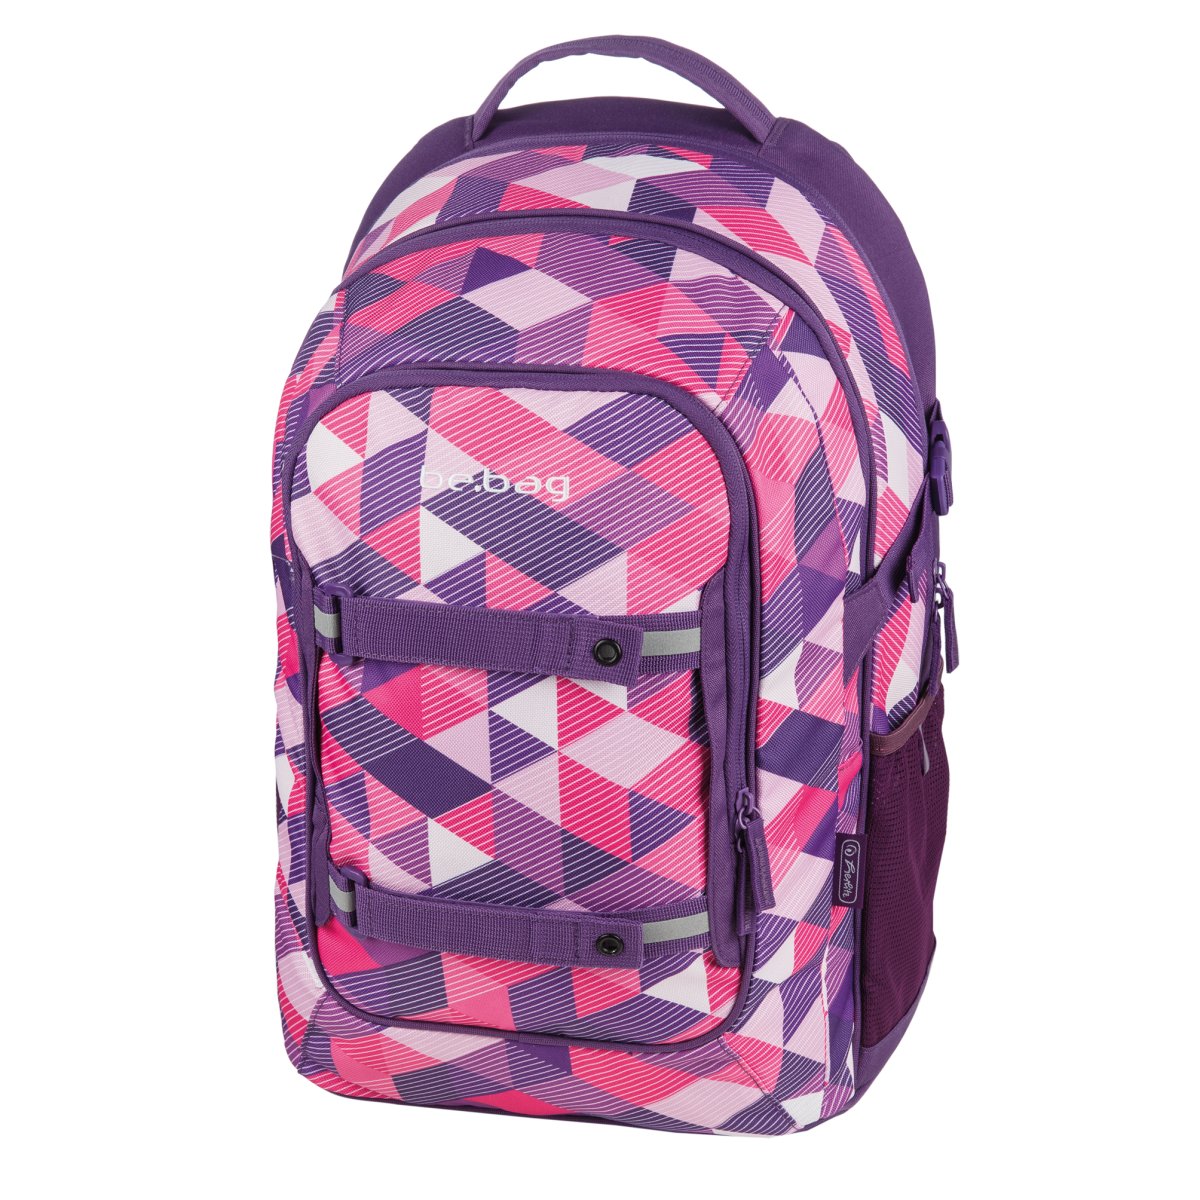 backpack be.bag Herlitz Purple beat Checked - school